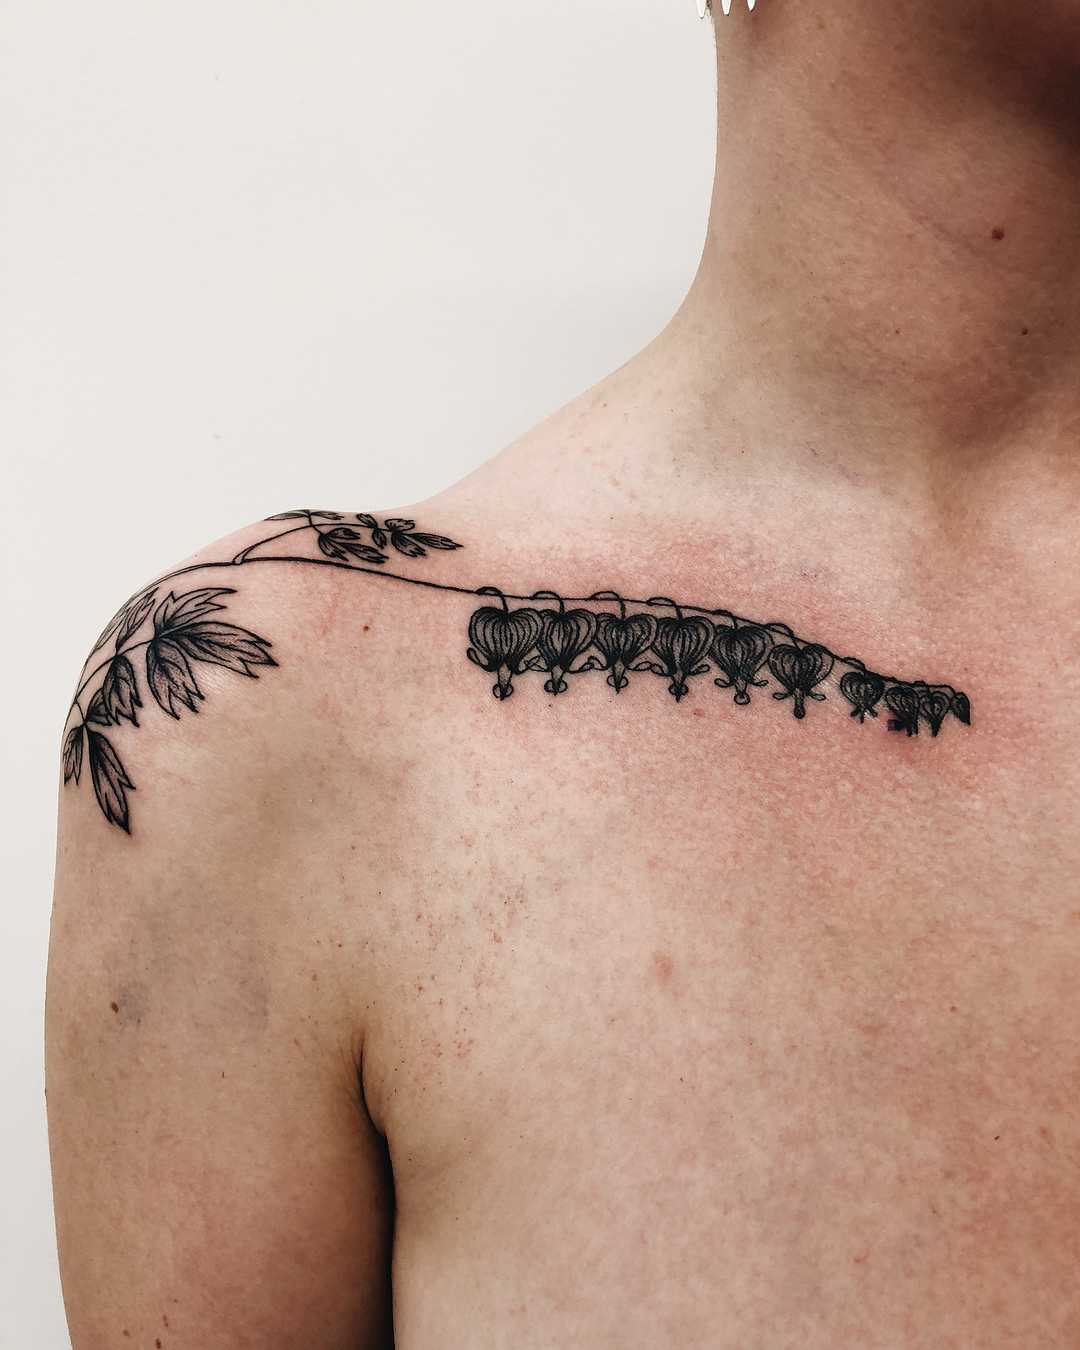 Collarbone Tattoo Pain: How Bad Do They Hurt? - AuthorityTattoo